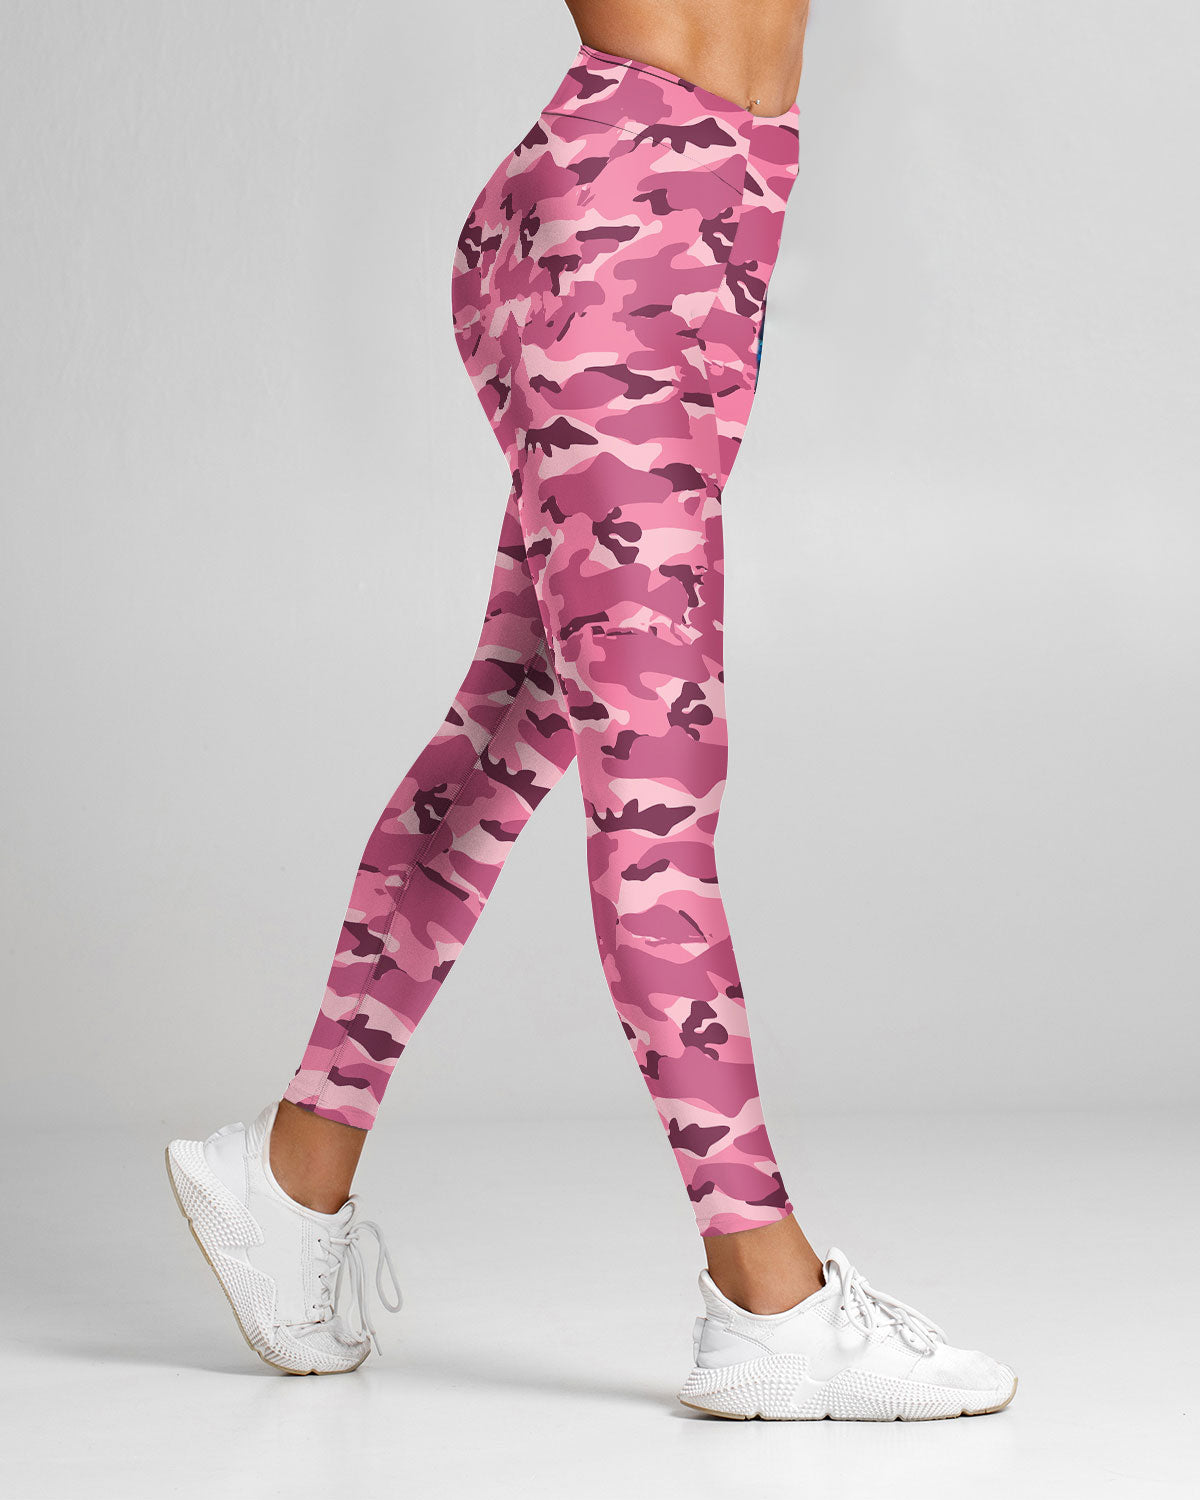 Brave™ Leggings - Pink Camo – Brave New Look